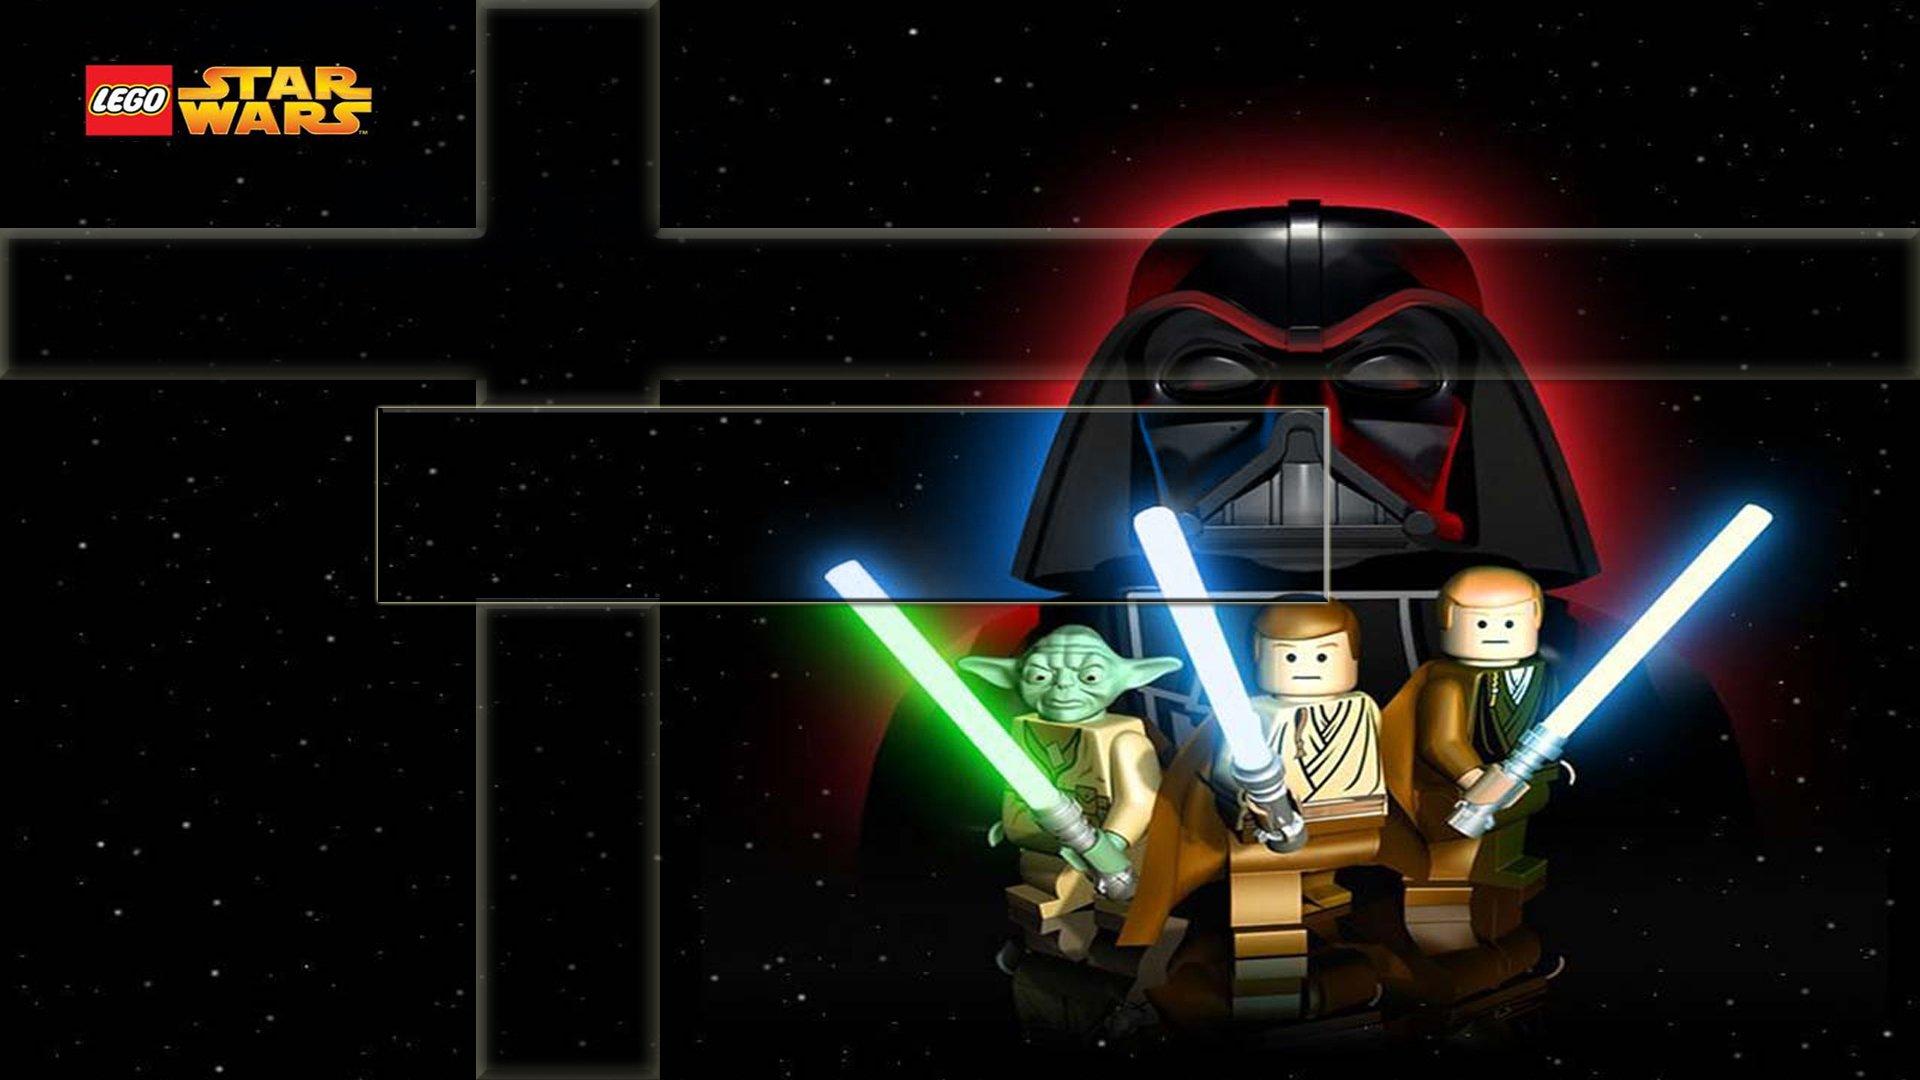 LEGO Star Wars III: The Clone Wars HD Wallpaper. Background Image